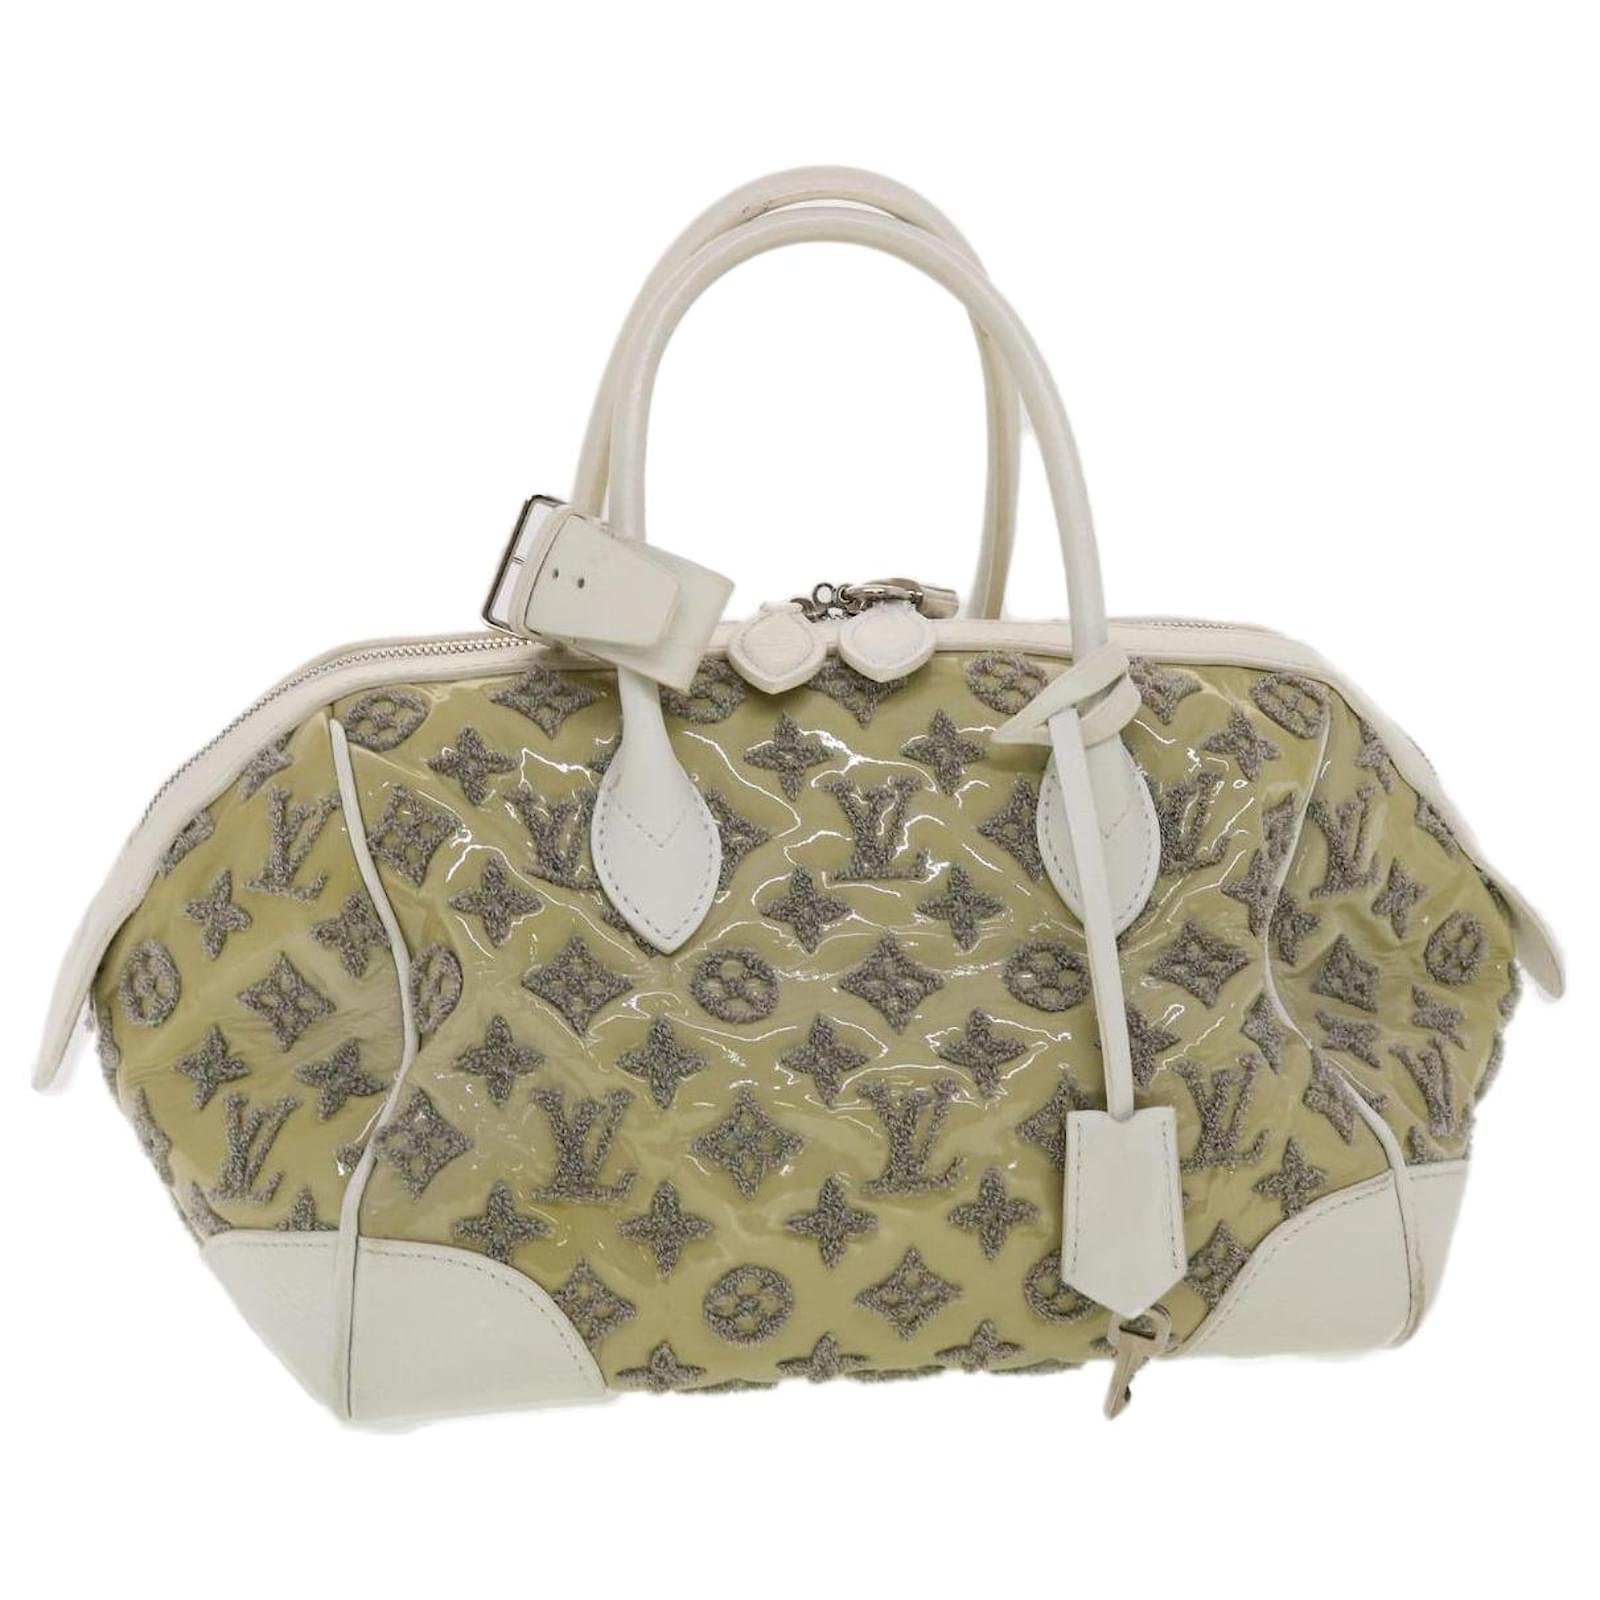 Louis Vuitton Speedy Patent Leather Bags & Handbags for Women